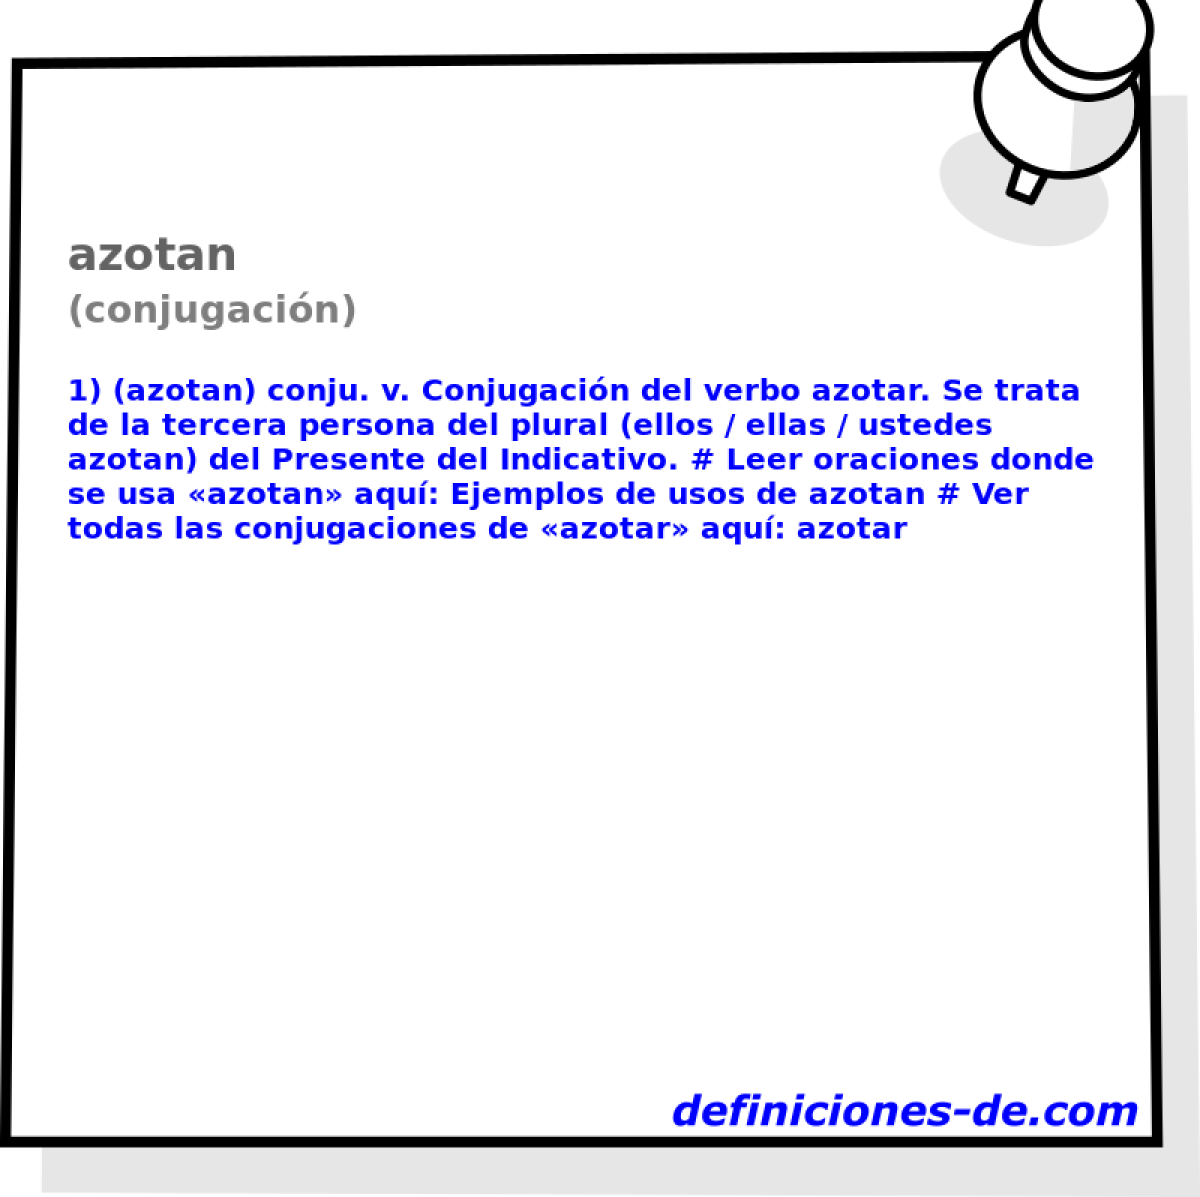 azotan (conjugacin)